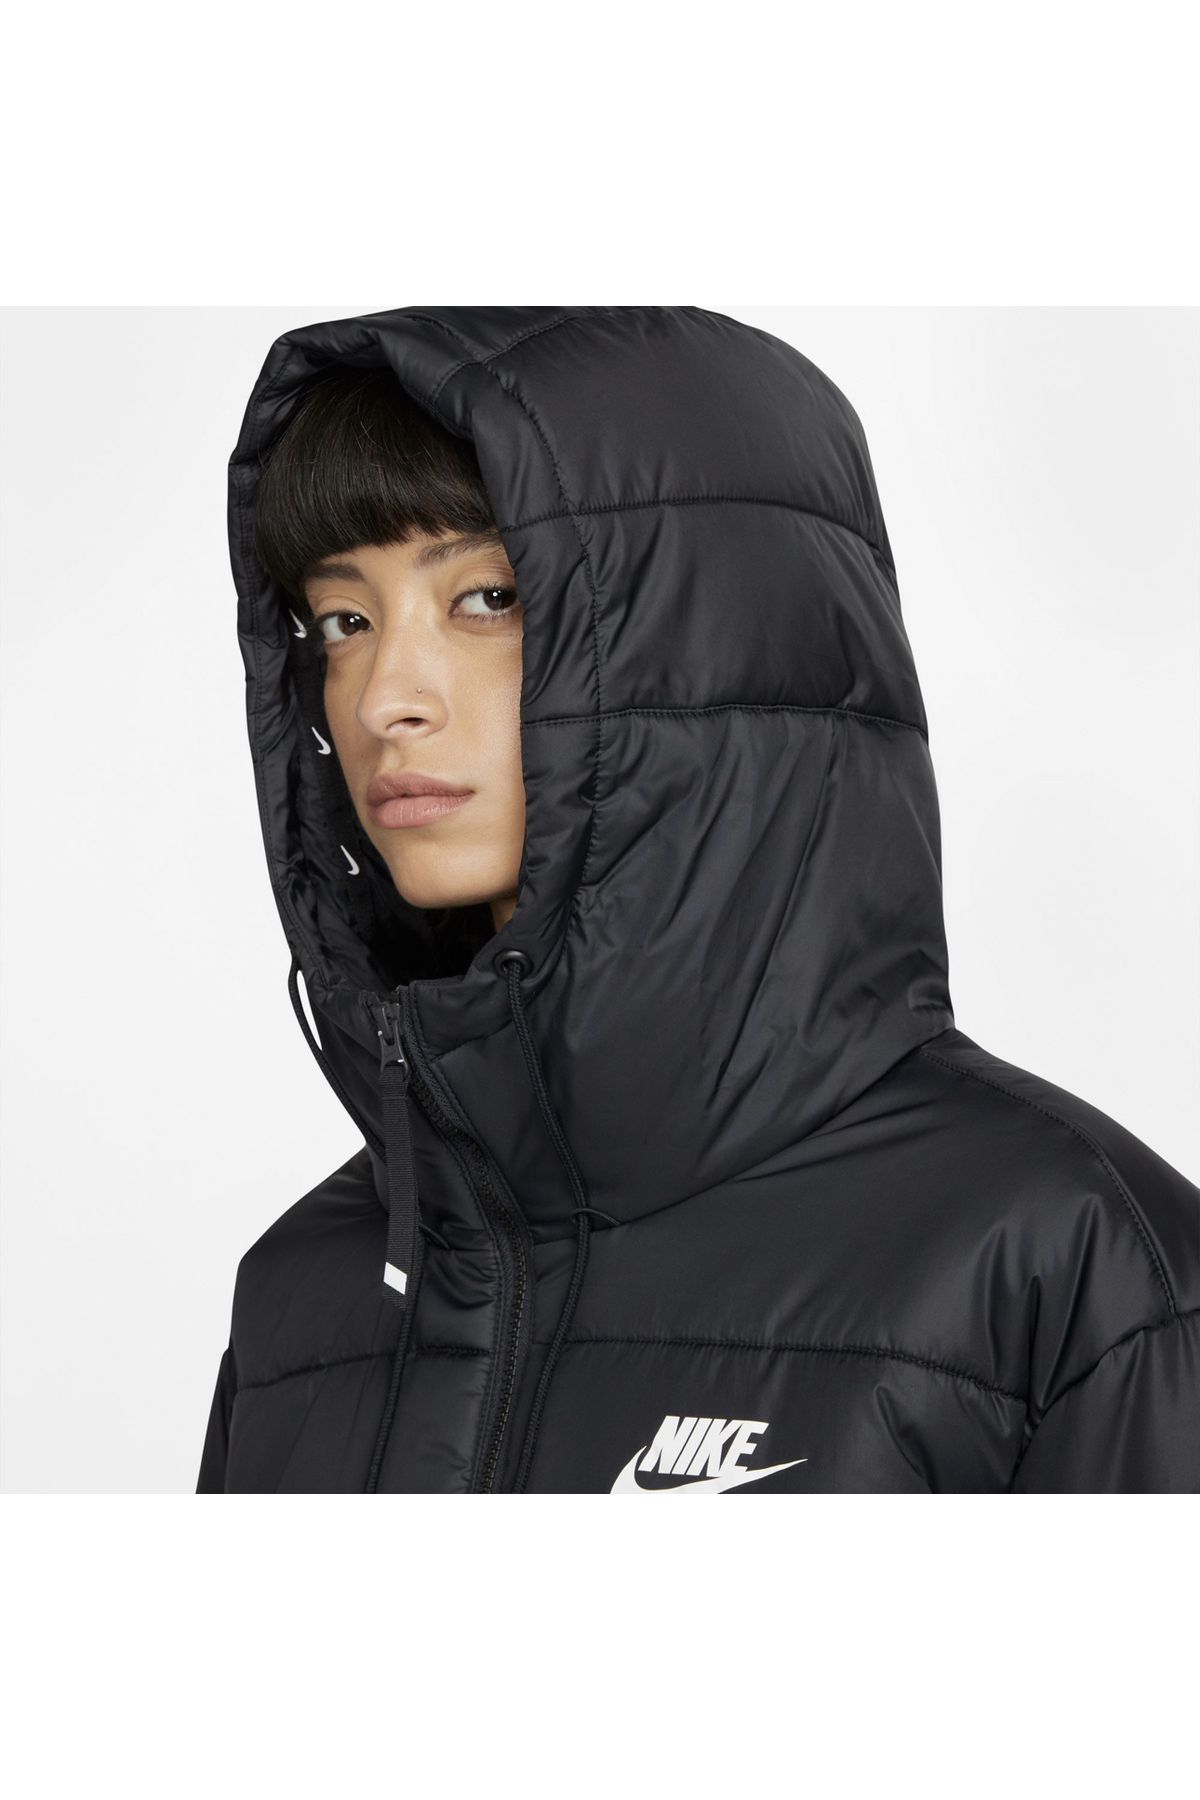 Nike Sportswear Therma-FIT Repel Classic Series Jacket Black